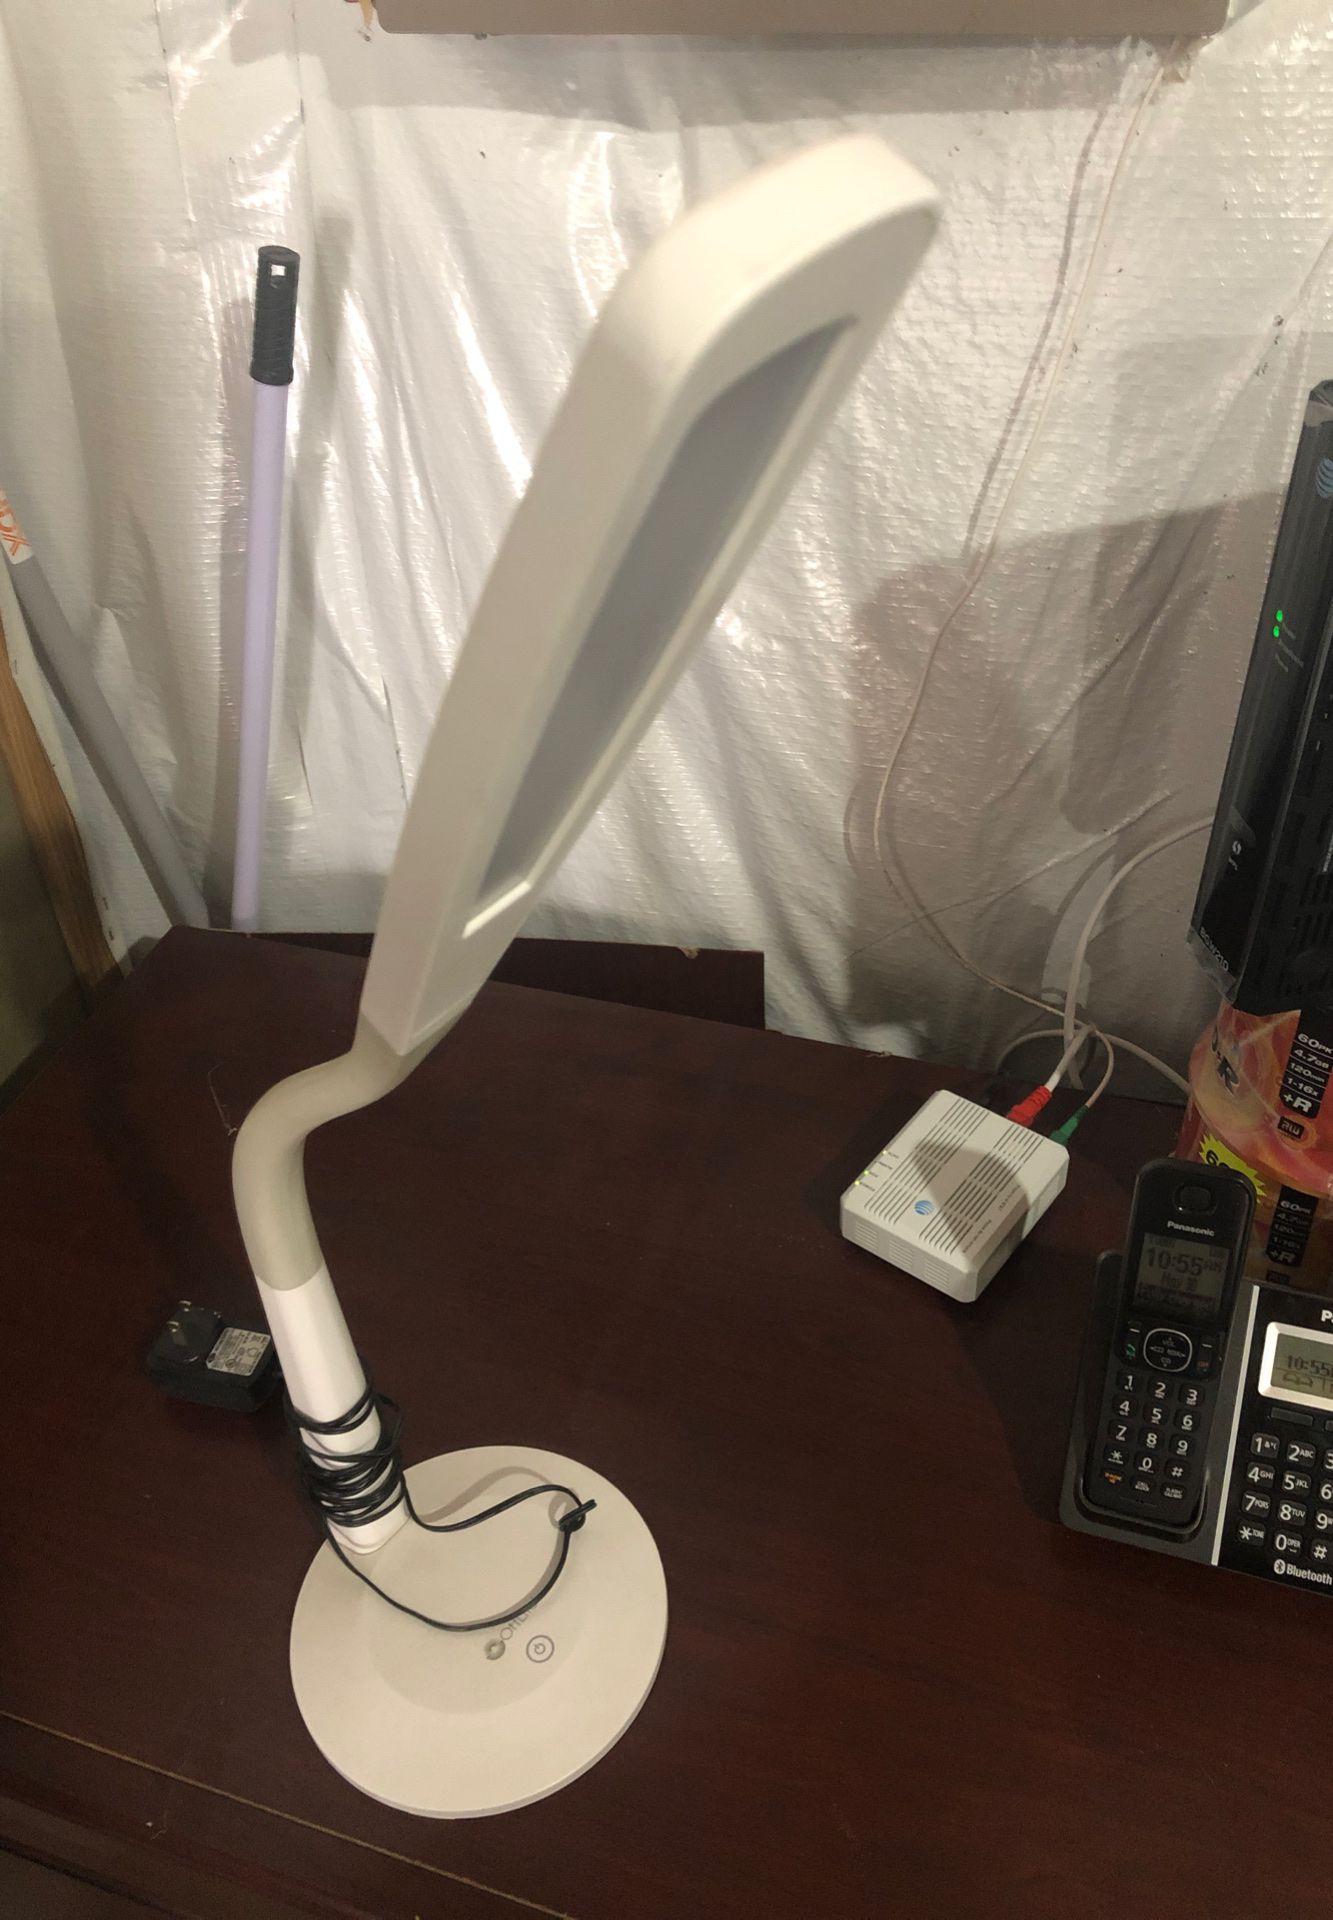 Table study lamp